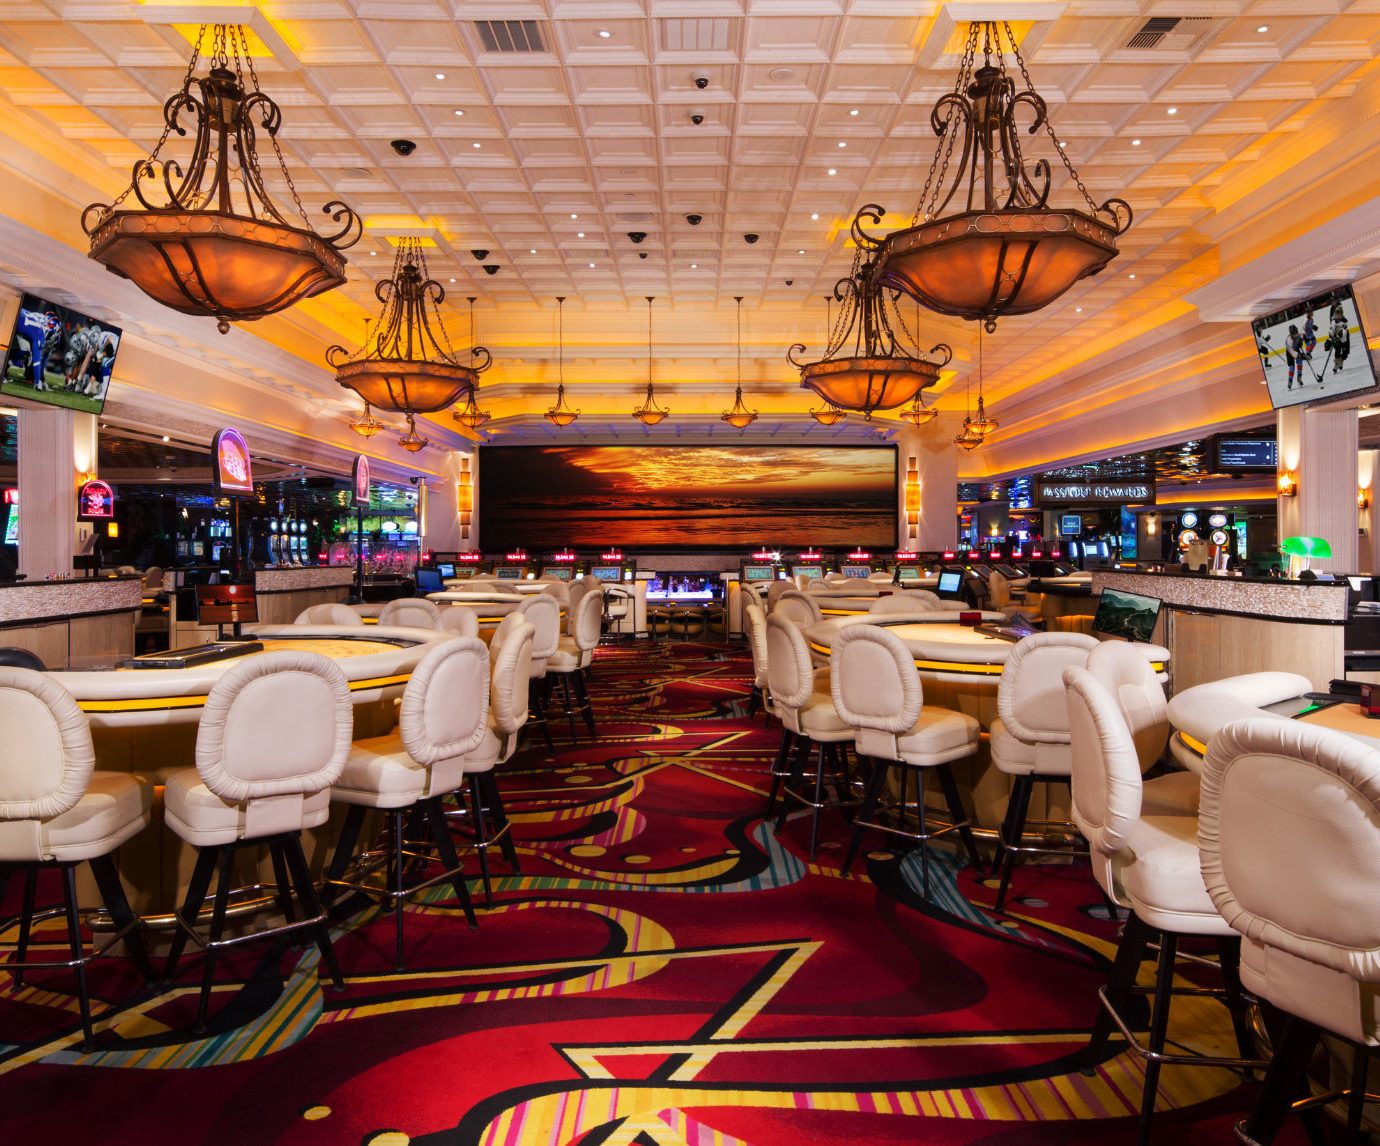 function hall restaurant Casino food court Bar